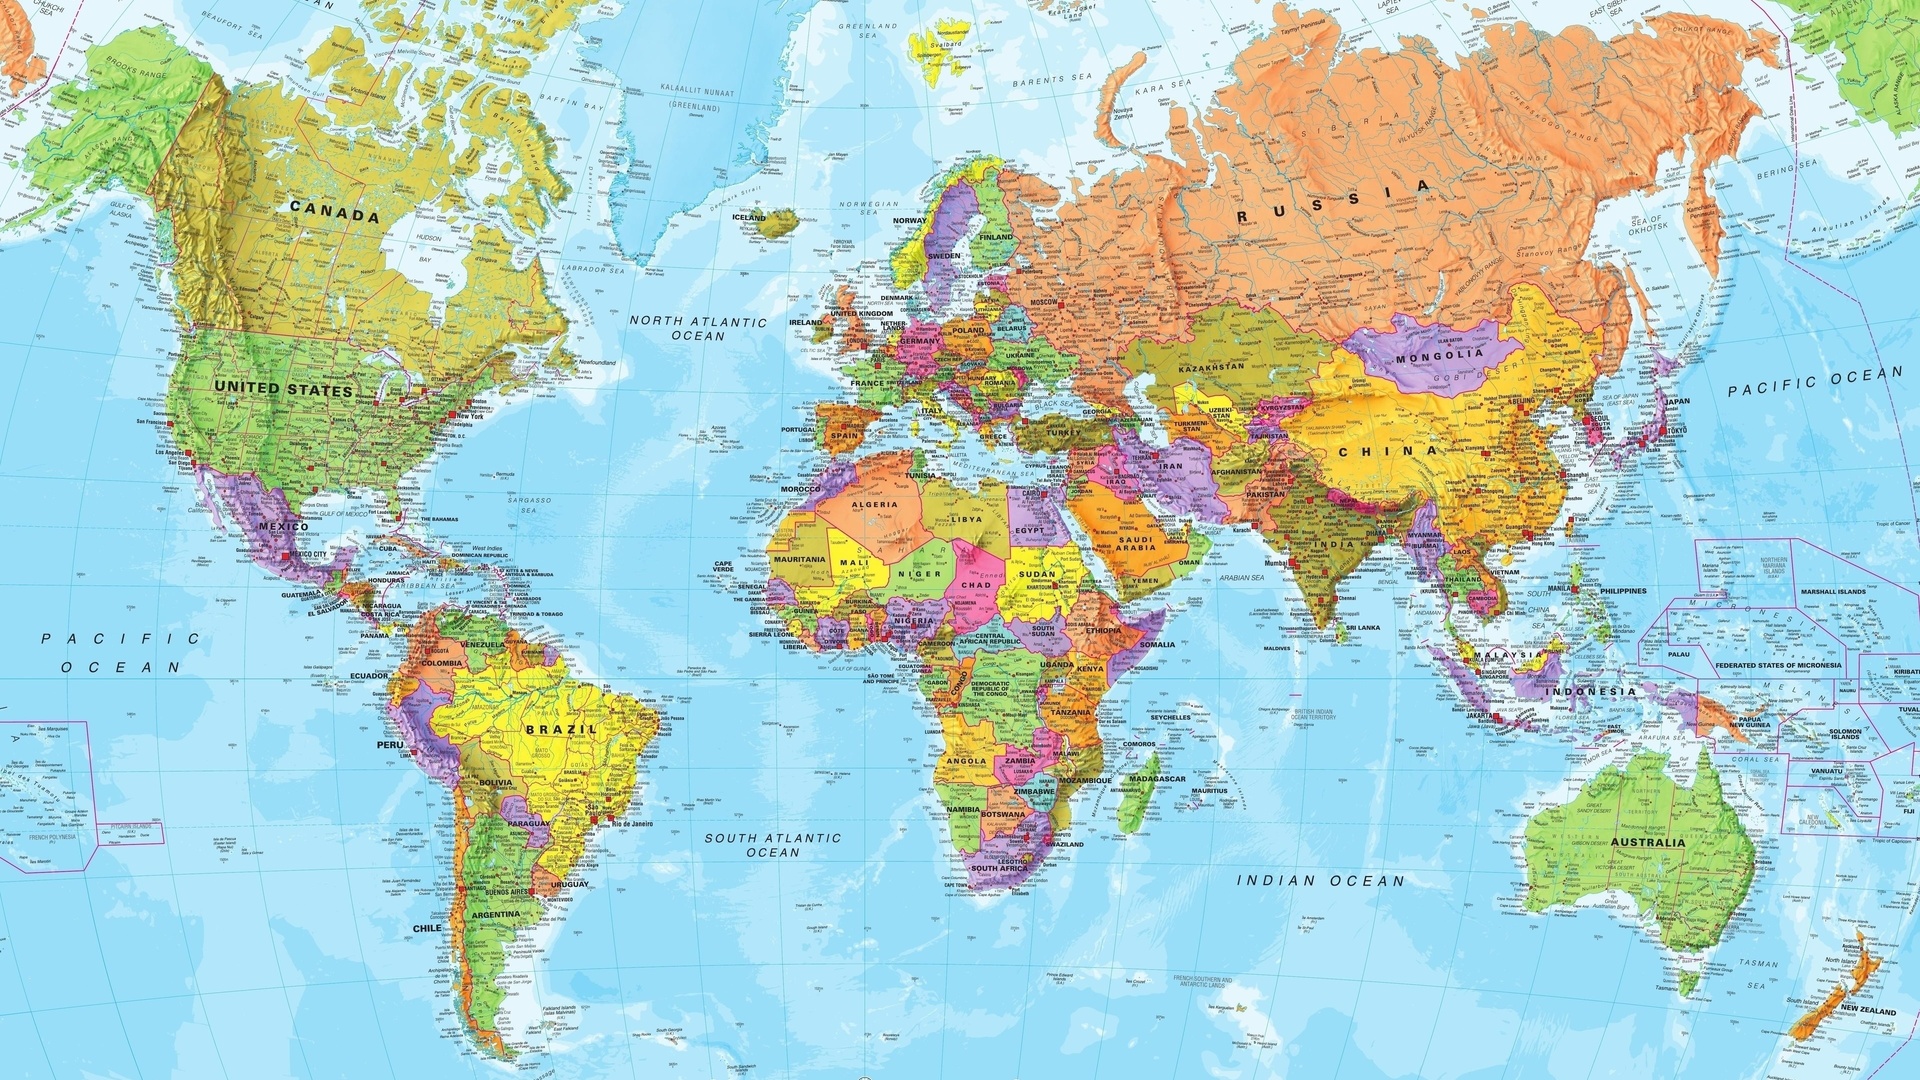 Картинки world map, карта мира - обои 1920x1080, картинка №276459